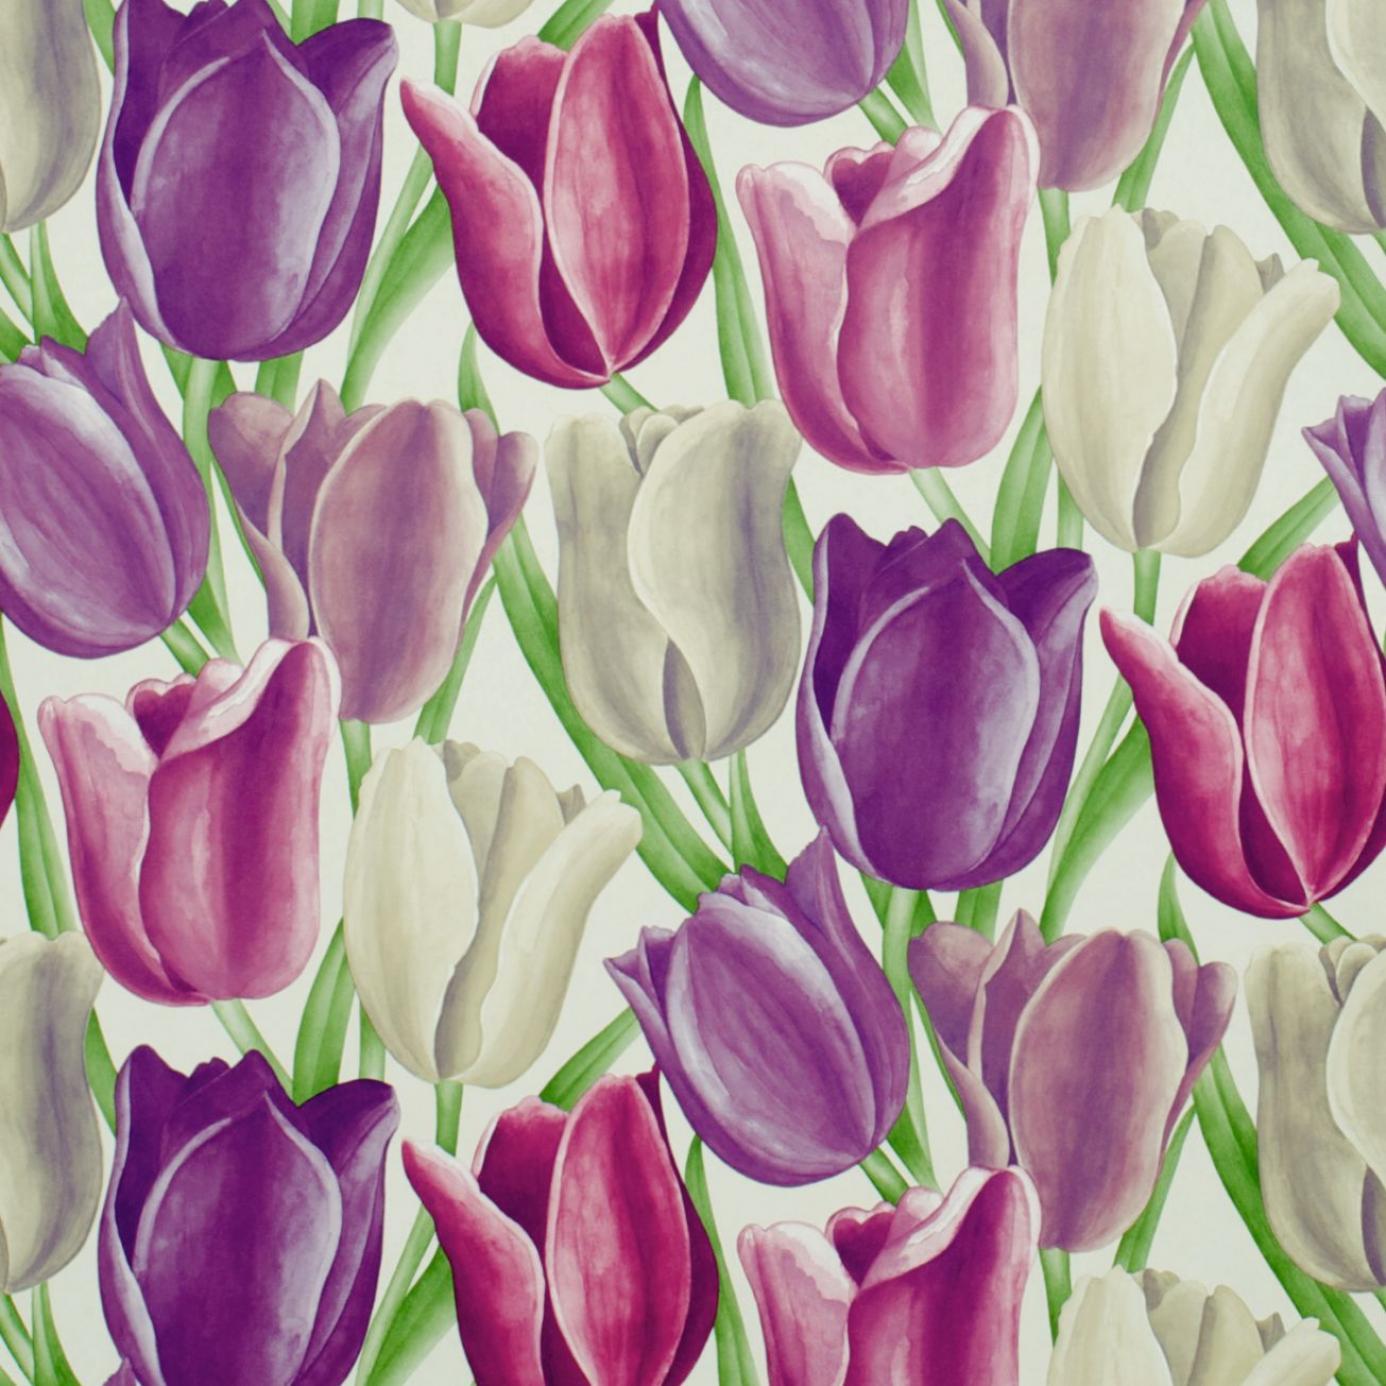 Sanderson Early Tulips Wallpaper PlumProduct Code: DVIWEA101